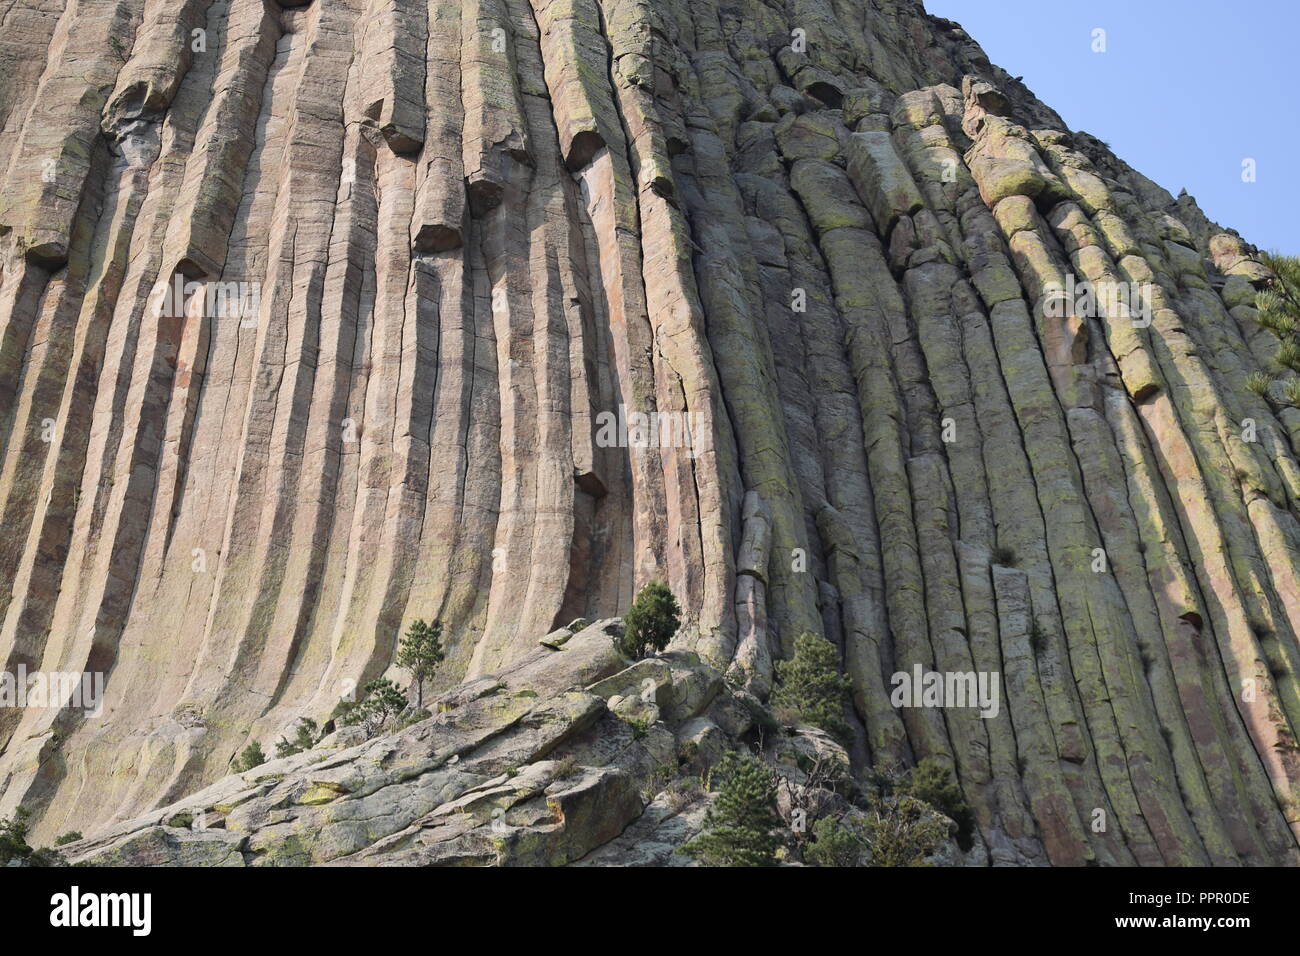 geological wonder of igneous columnar rock at Devils Tower Stock Photo